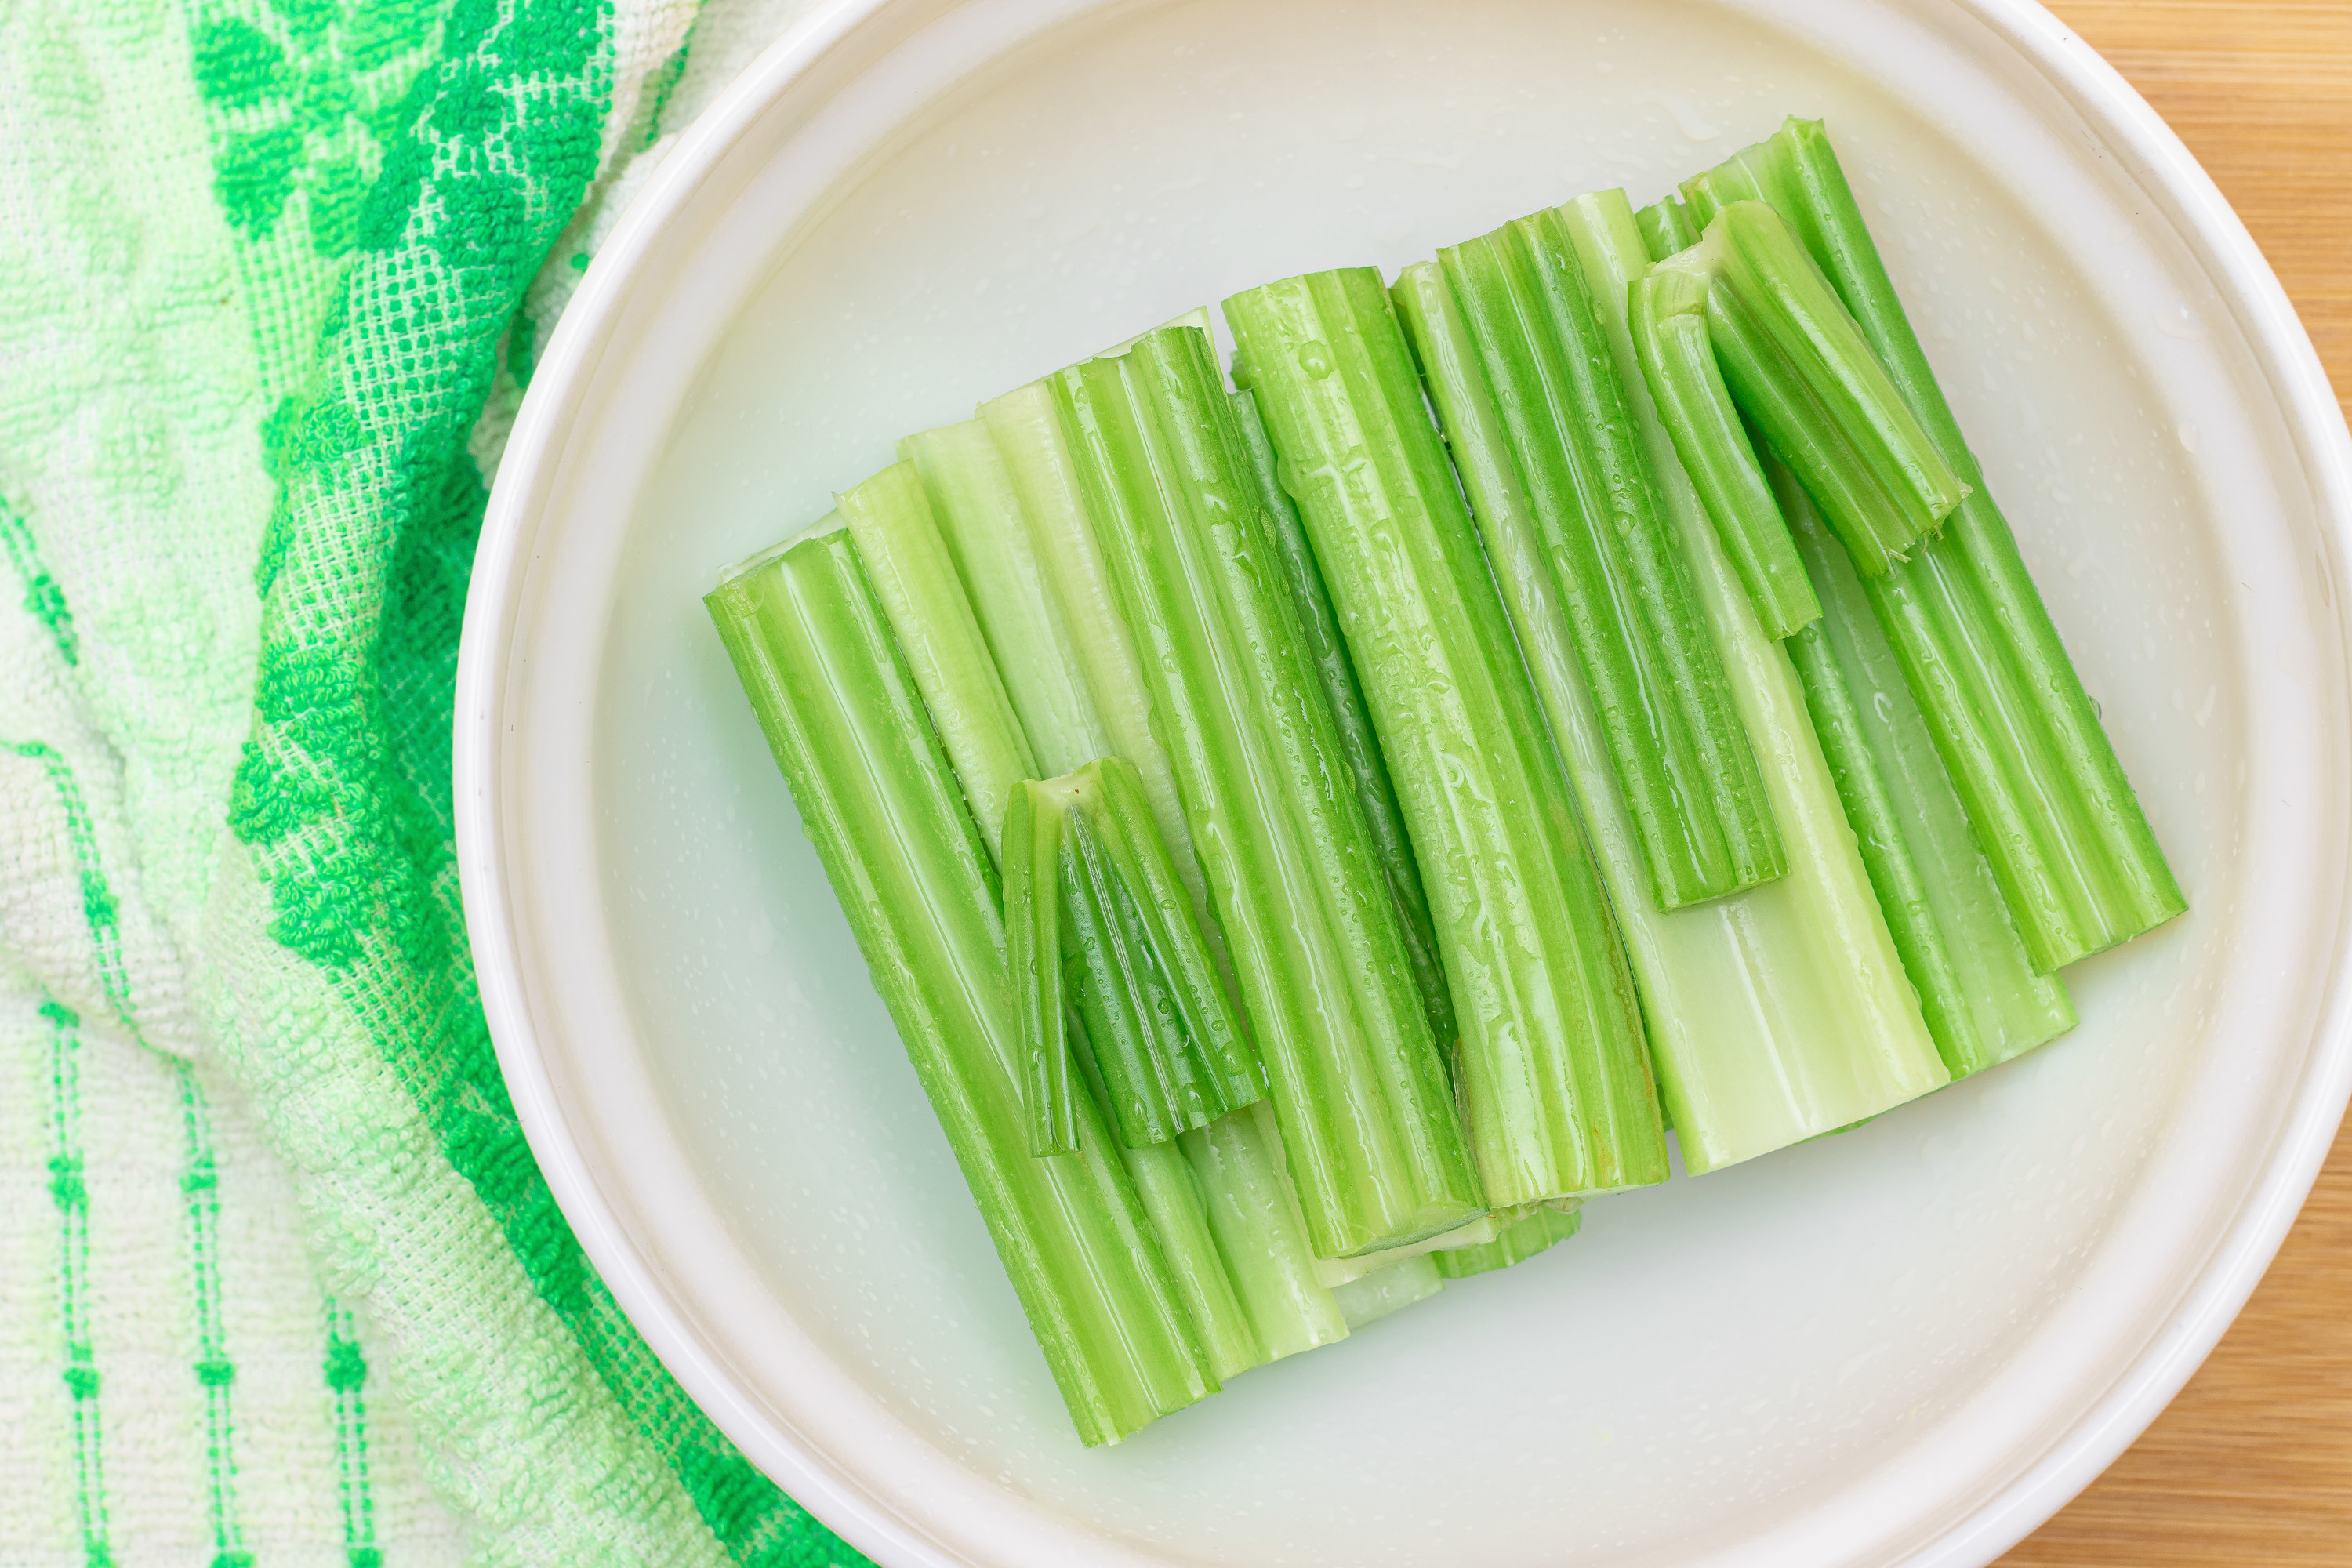 Plate of celery sticks